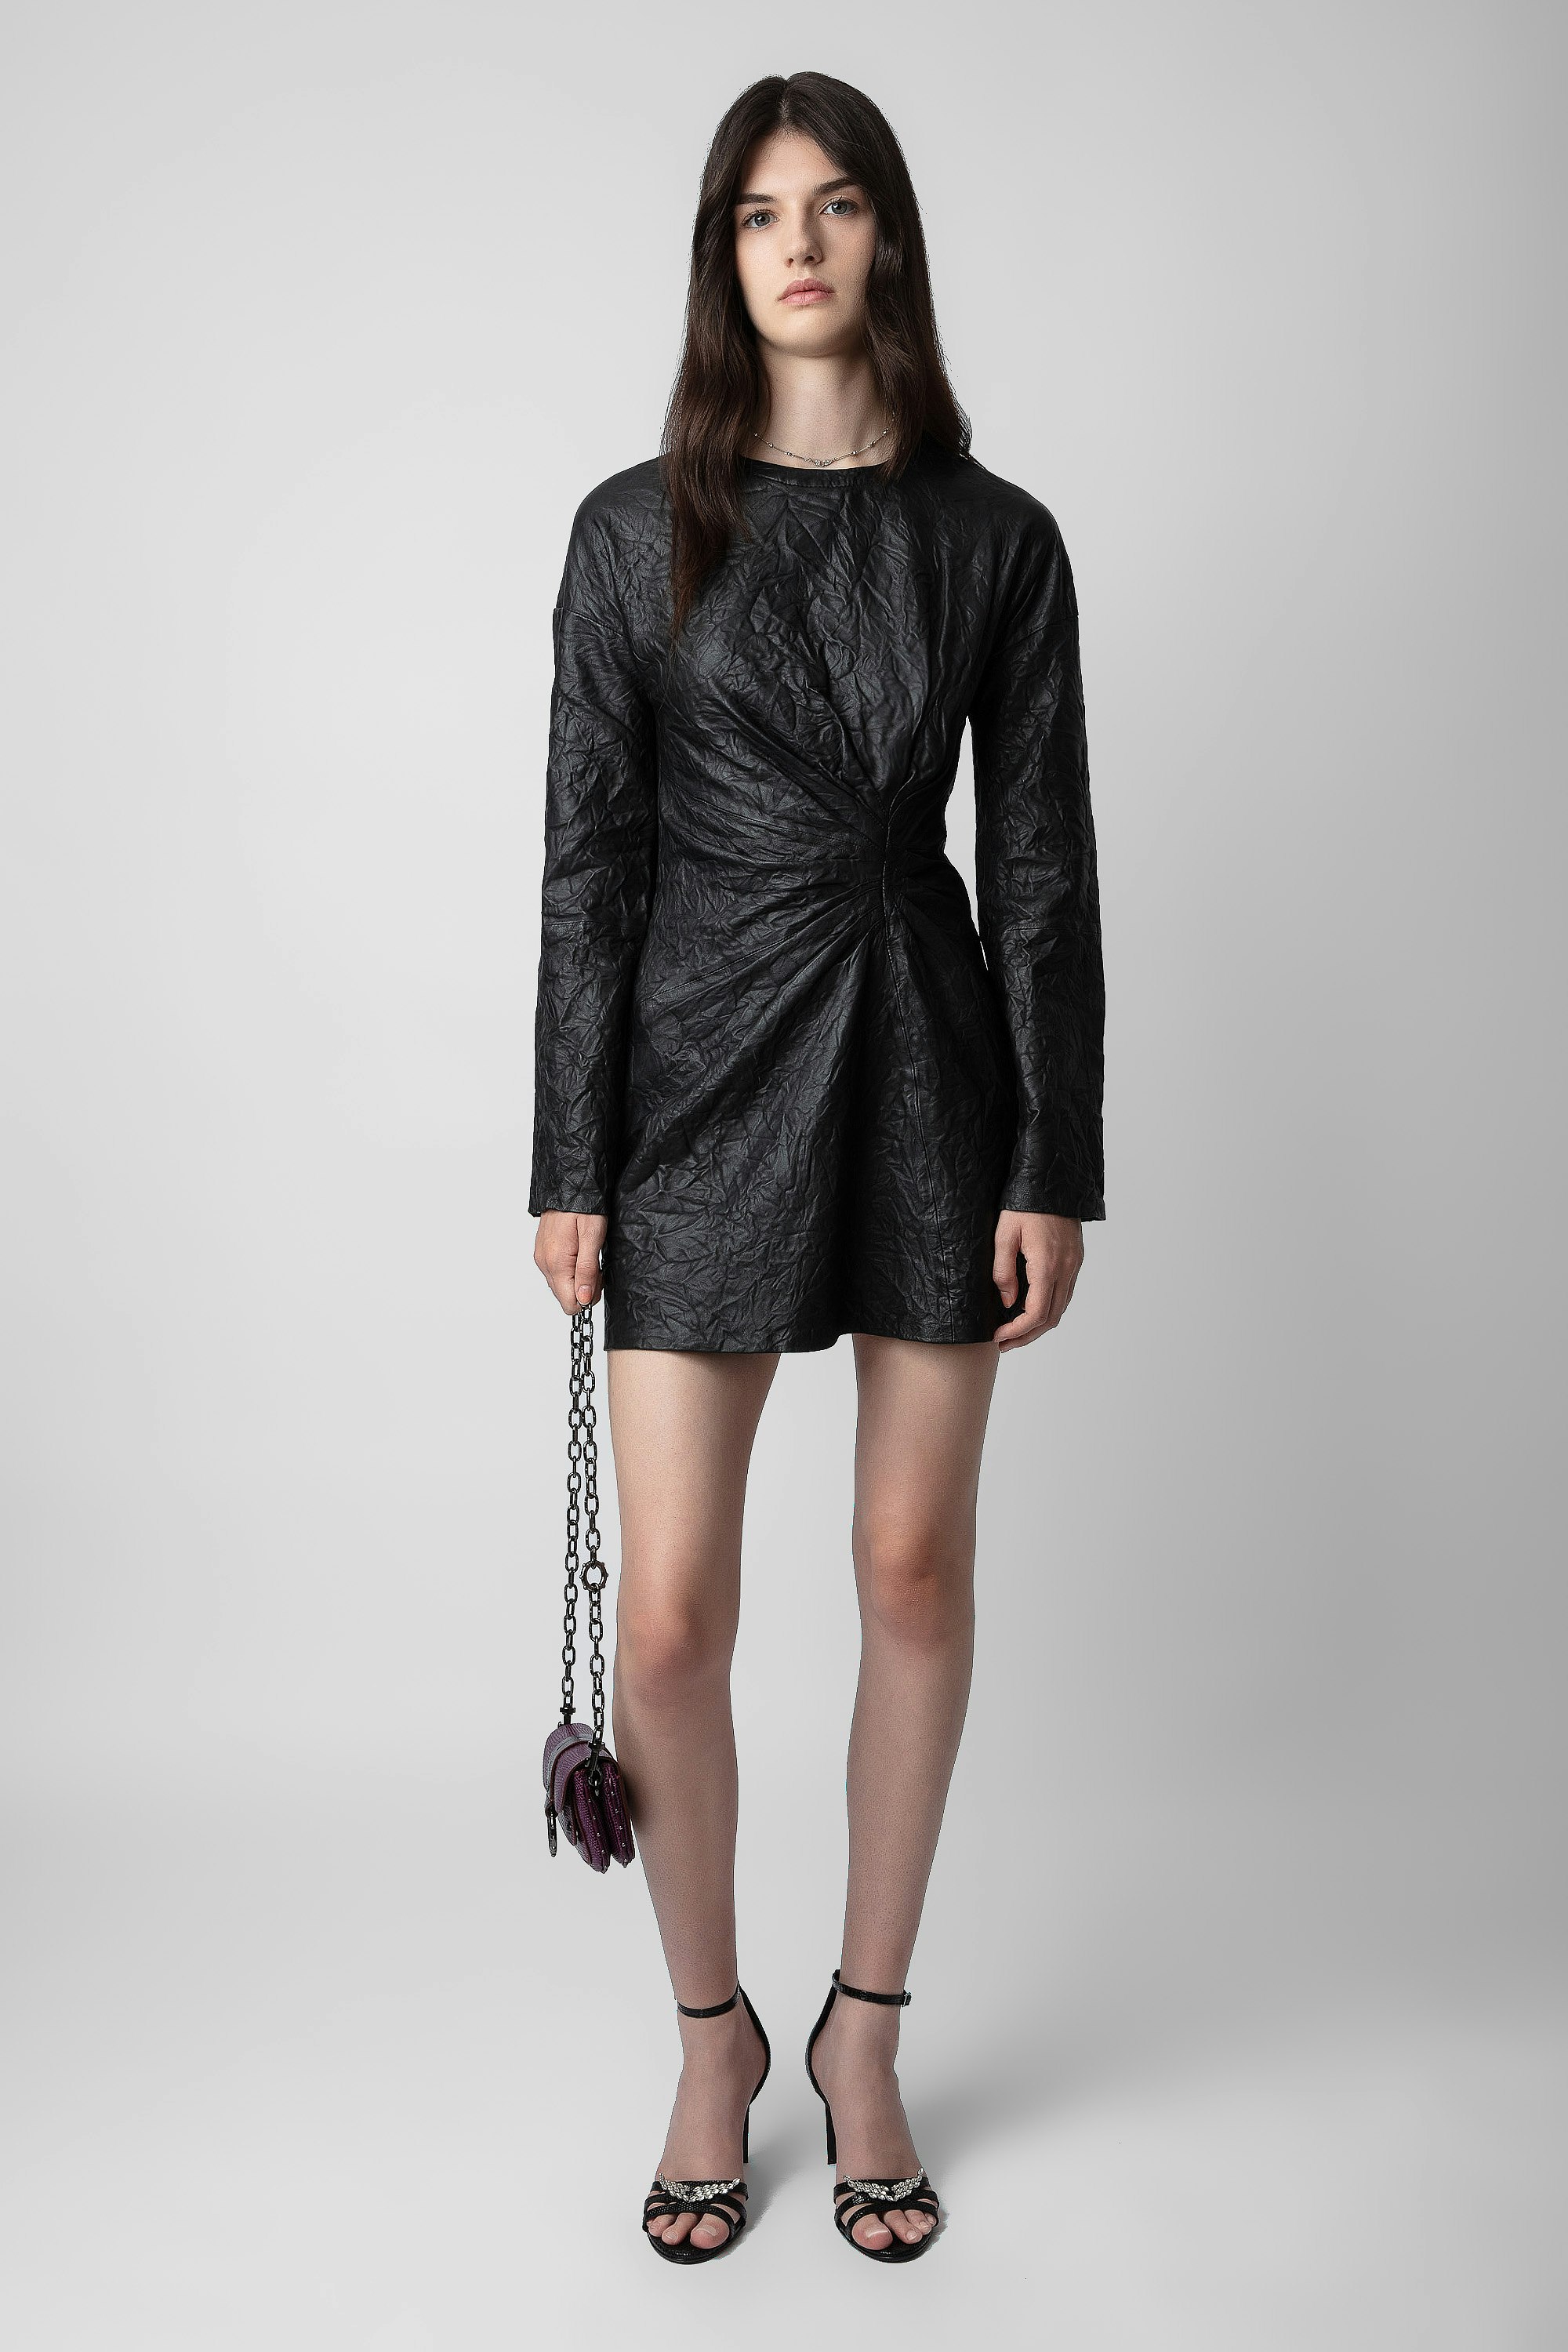 Rixina Crinkled Leather Dress - Women’s short black crinkled knot-effect leather dress.